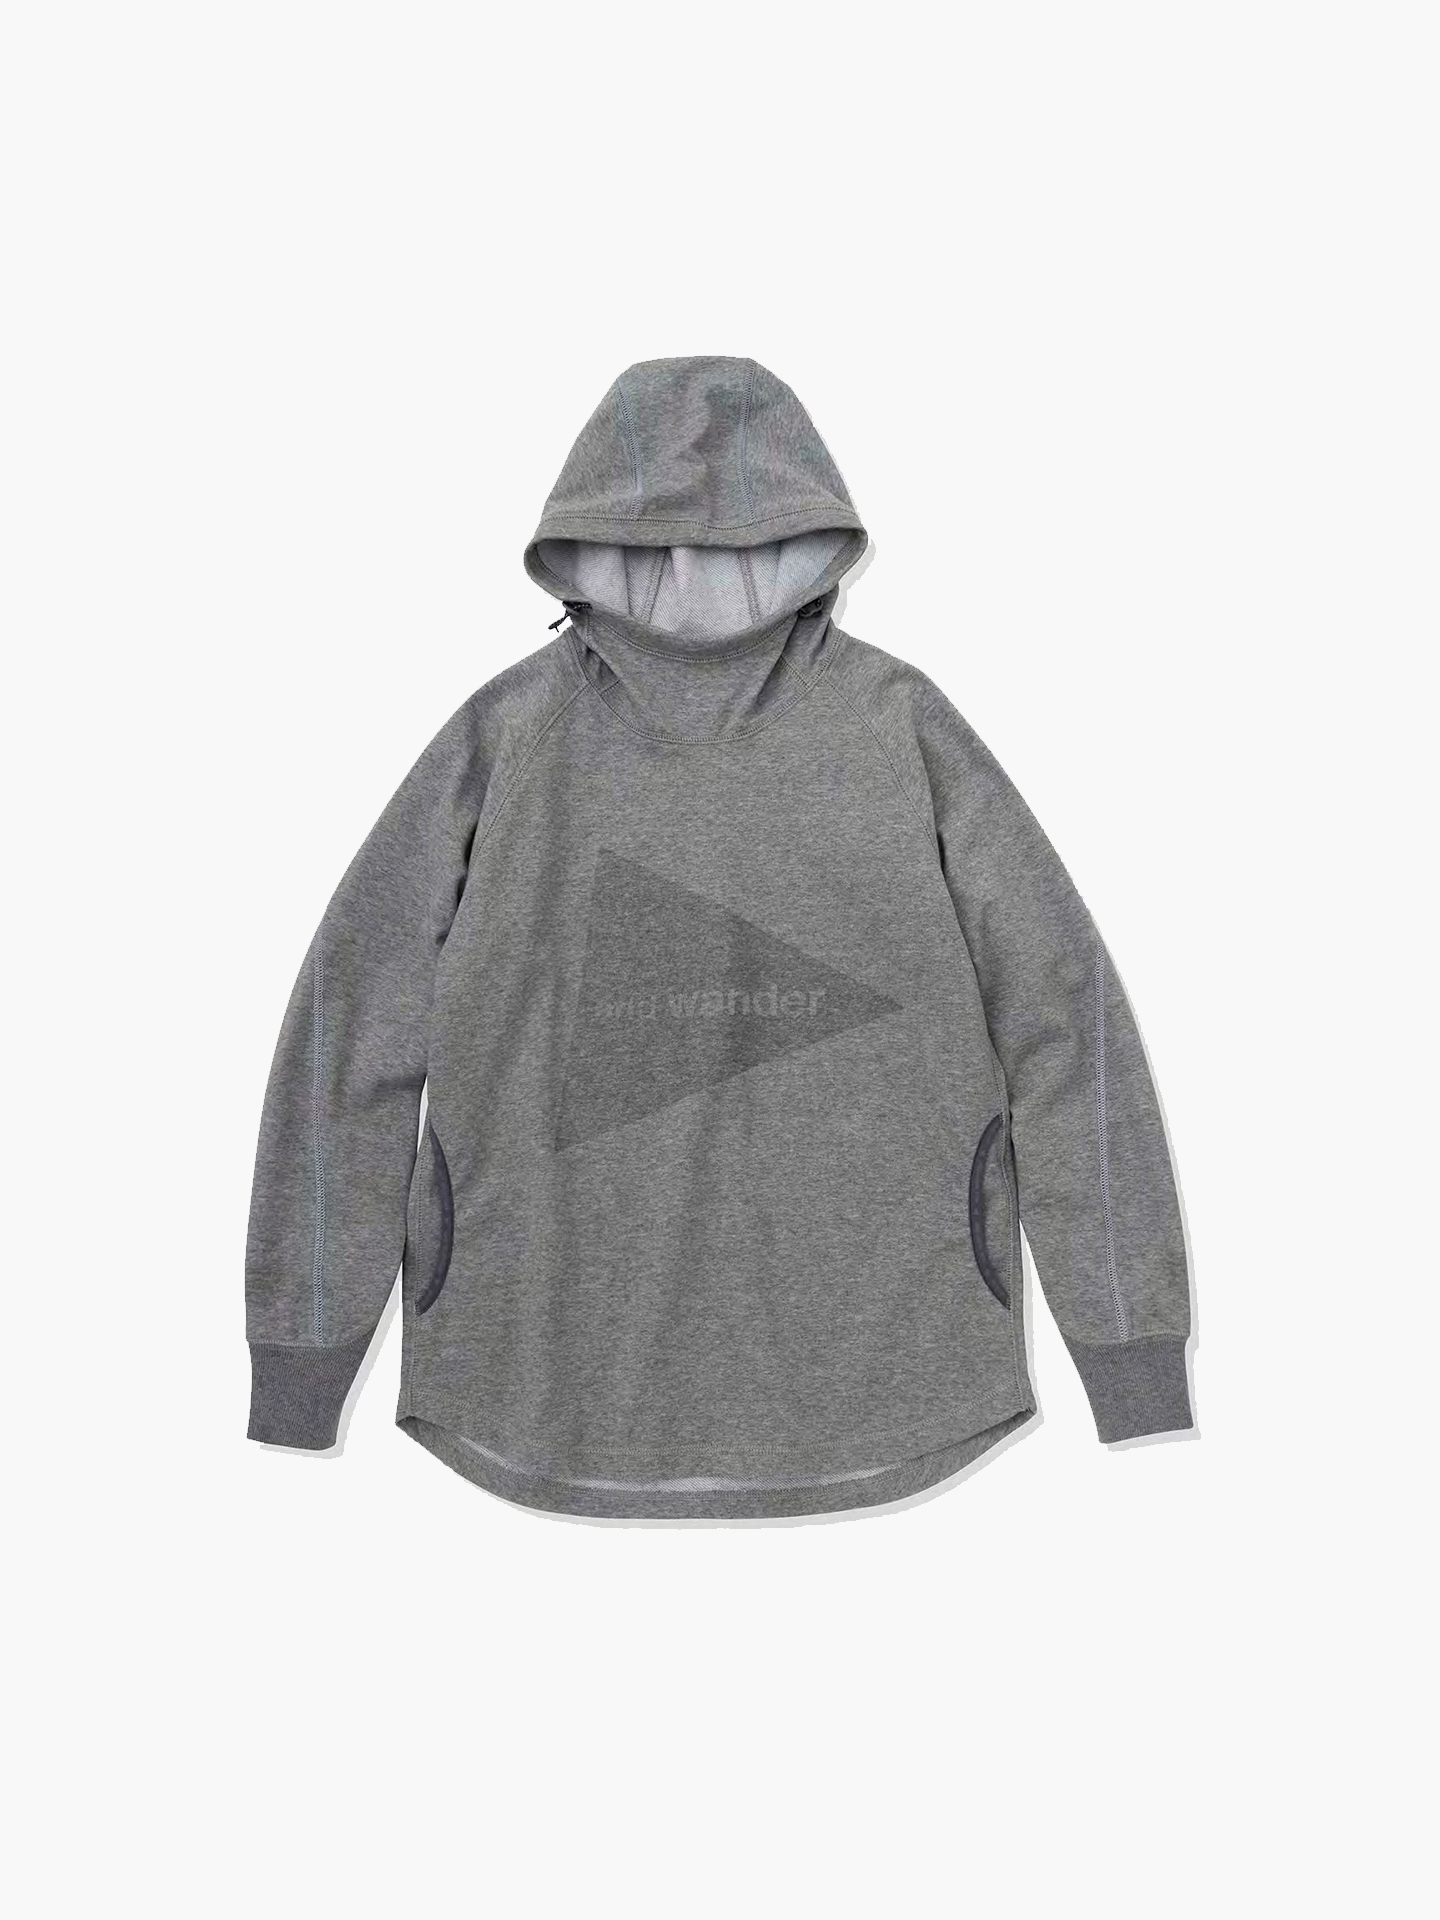 Sweat hoodie Худи, 65% хлопок, 35% полиэстер, размер M, серый